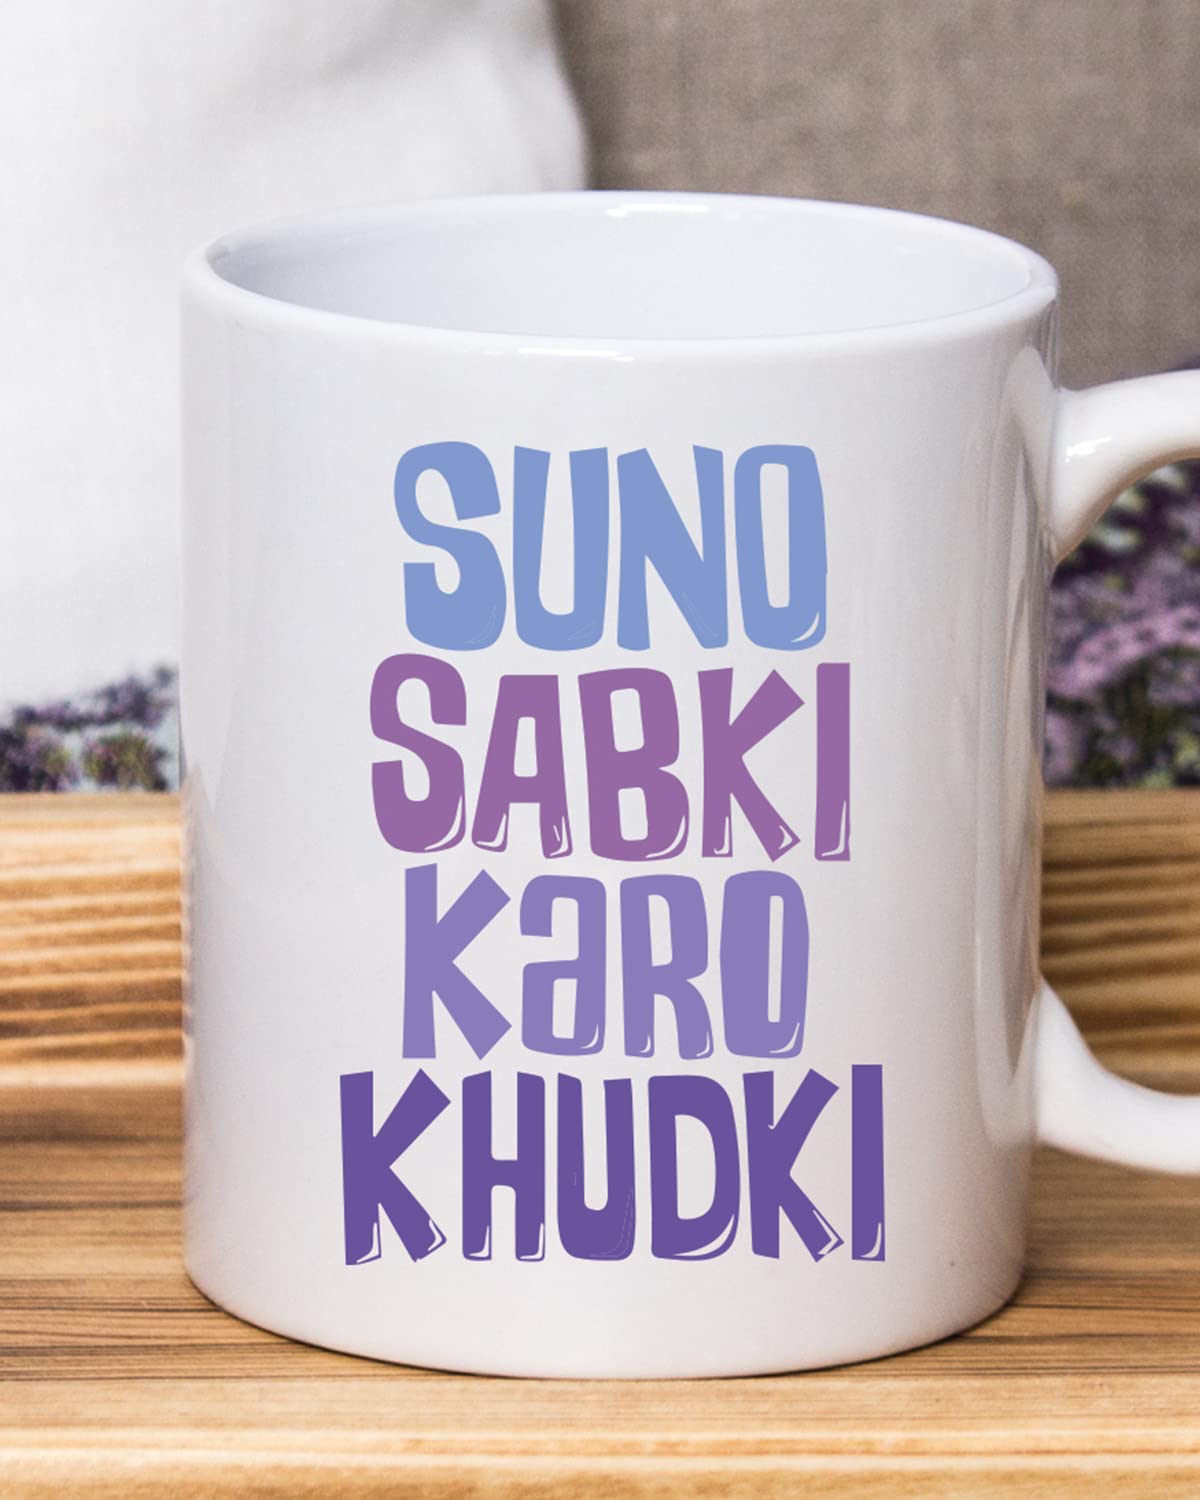 SUNO SABKI KARO KHUDKI Coffee Mug - Birthday Gift, Motivational Mug, Printed with Inspiring Quotes, Positivity Mug, Inspirational Gift for Him & Her, Best Friend Gift, Gifts for Her, Cheer Up Gift